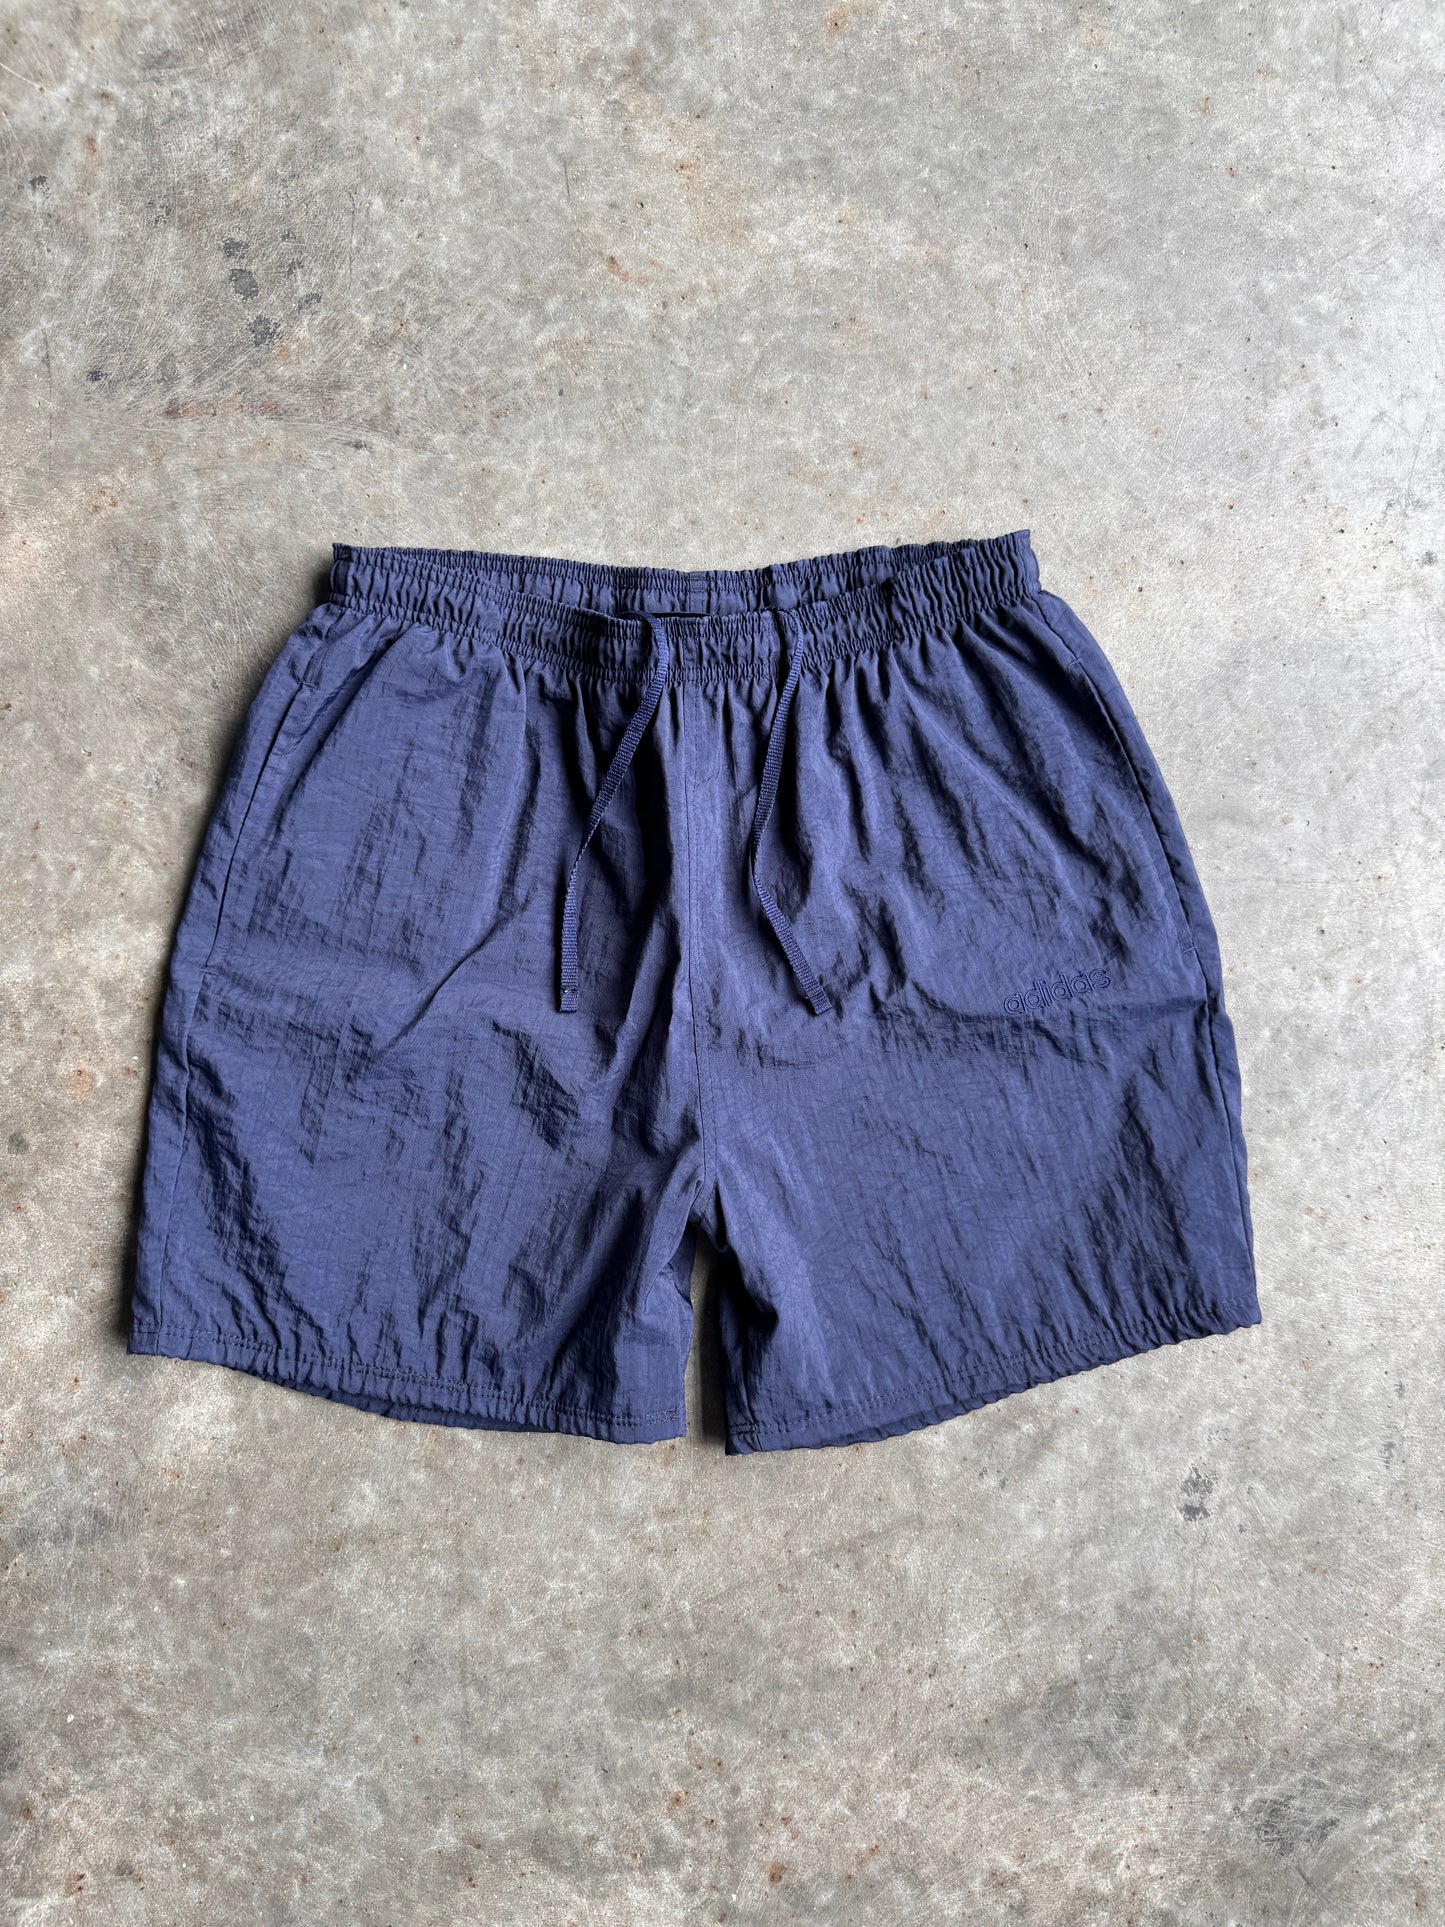 Vintage Reworked Navy Blue Adidas Shorts - L